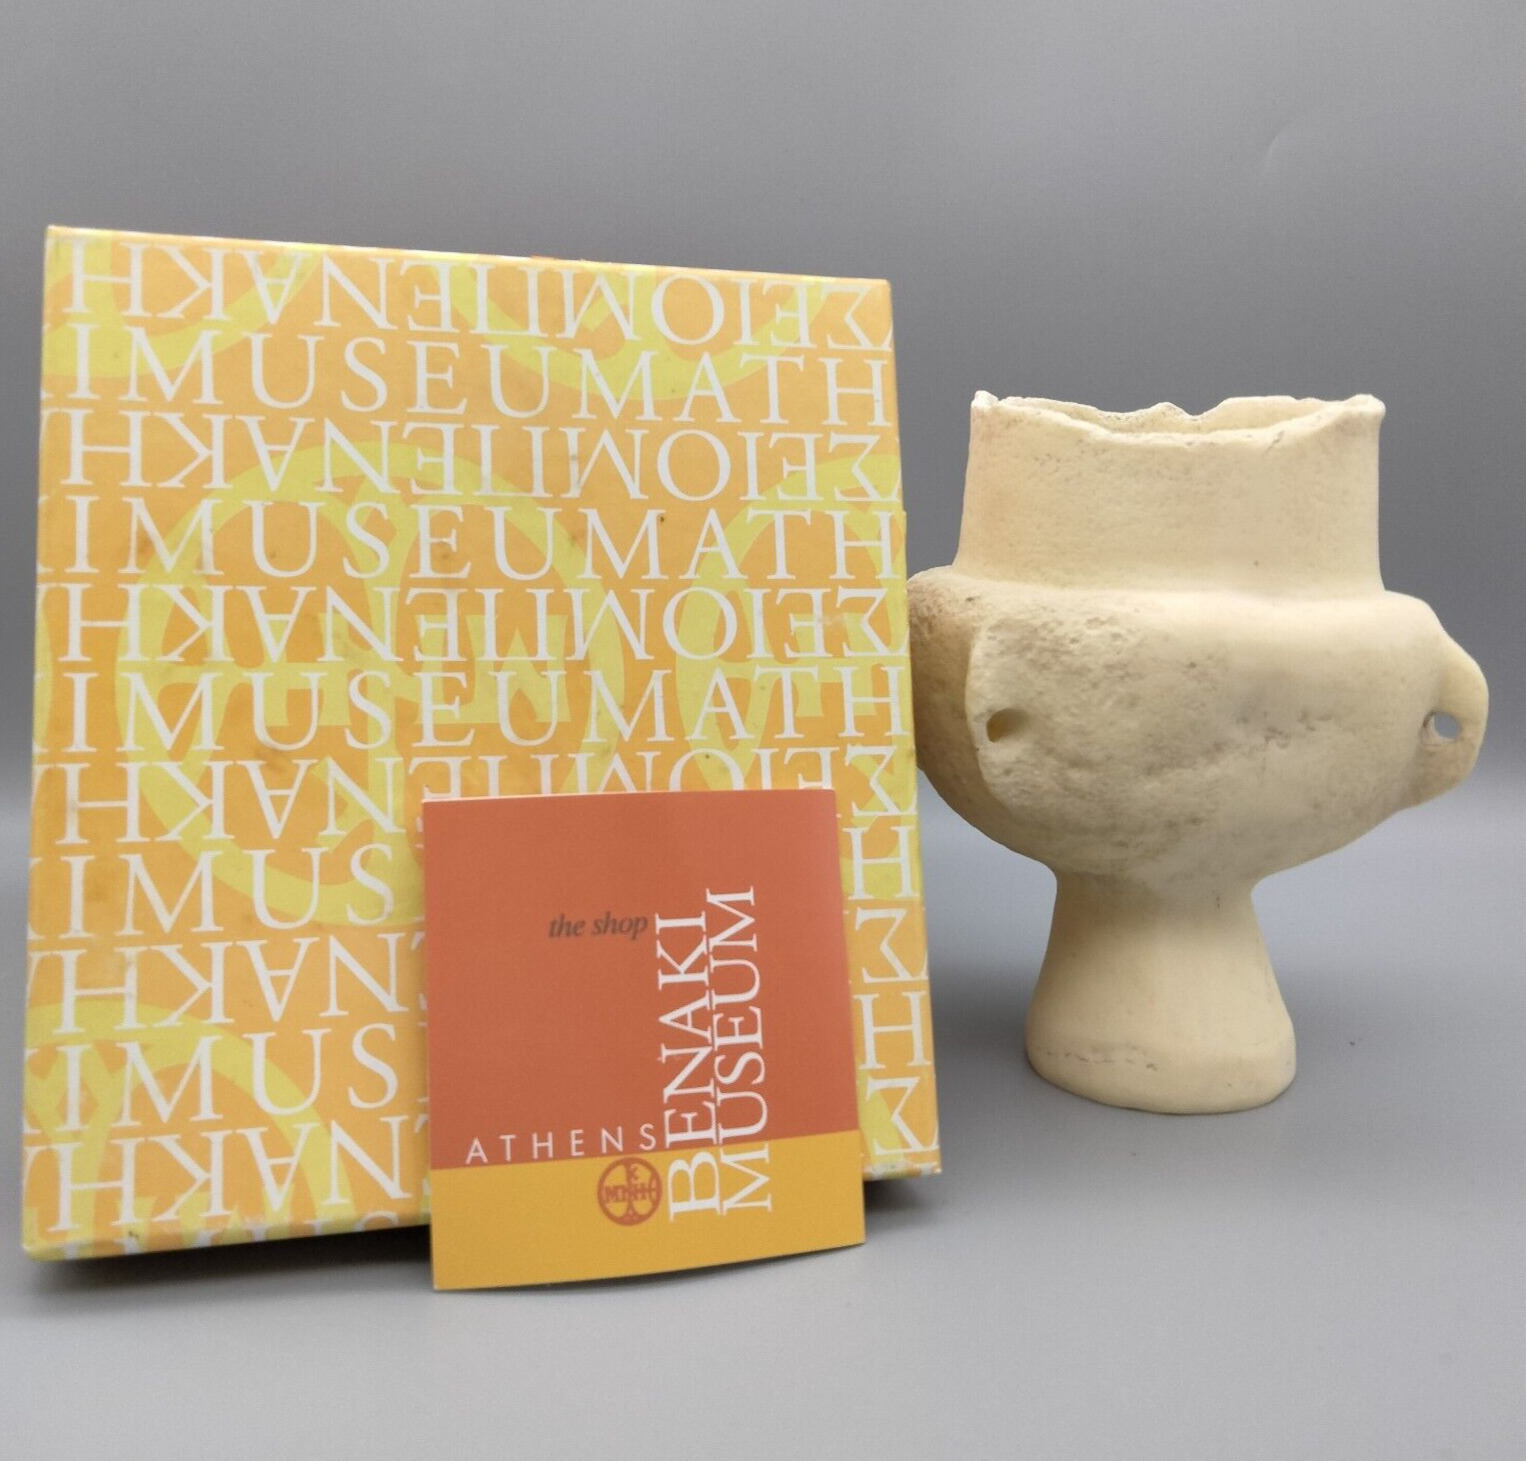 Cycladic Vase Benaki Museum Replica Bonded Marble Gift Shop Original Packaging